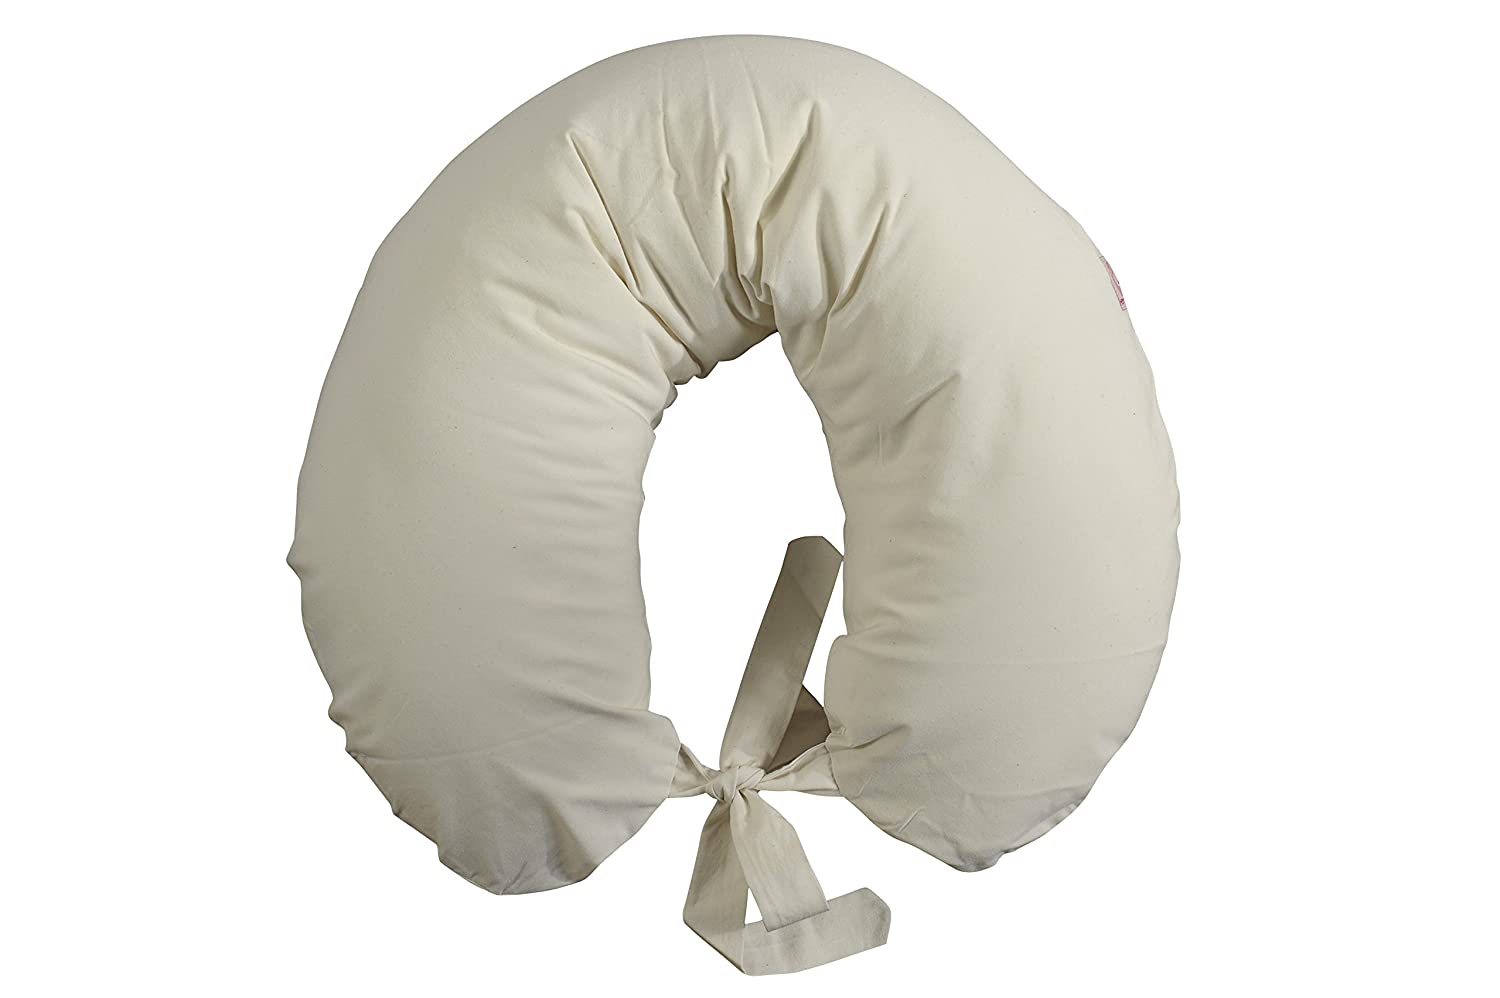 Merrymama - Replacement cover for nursing pillow 130 cm, ecru